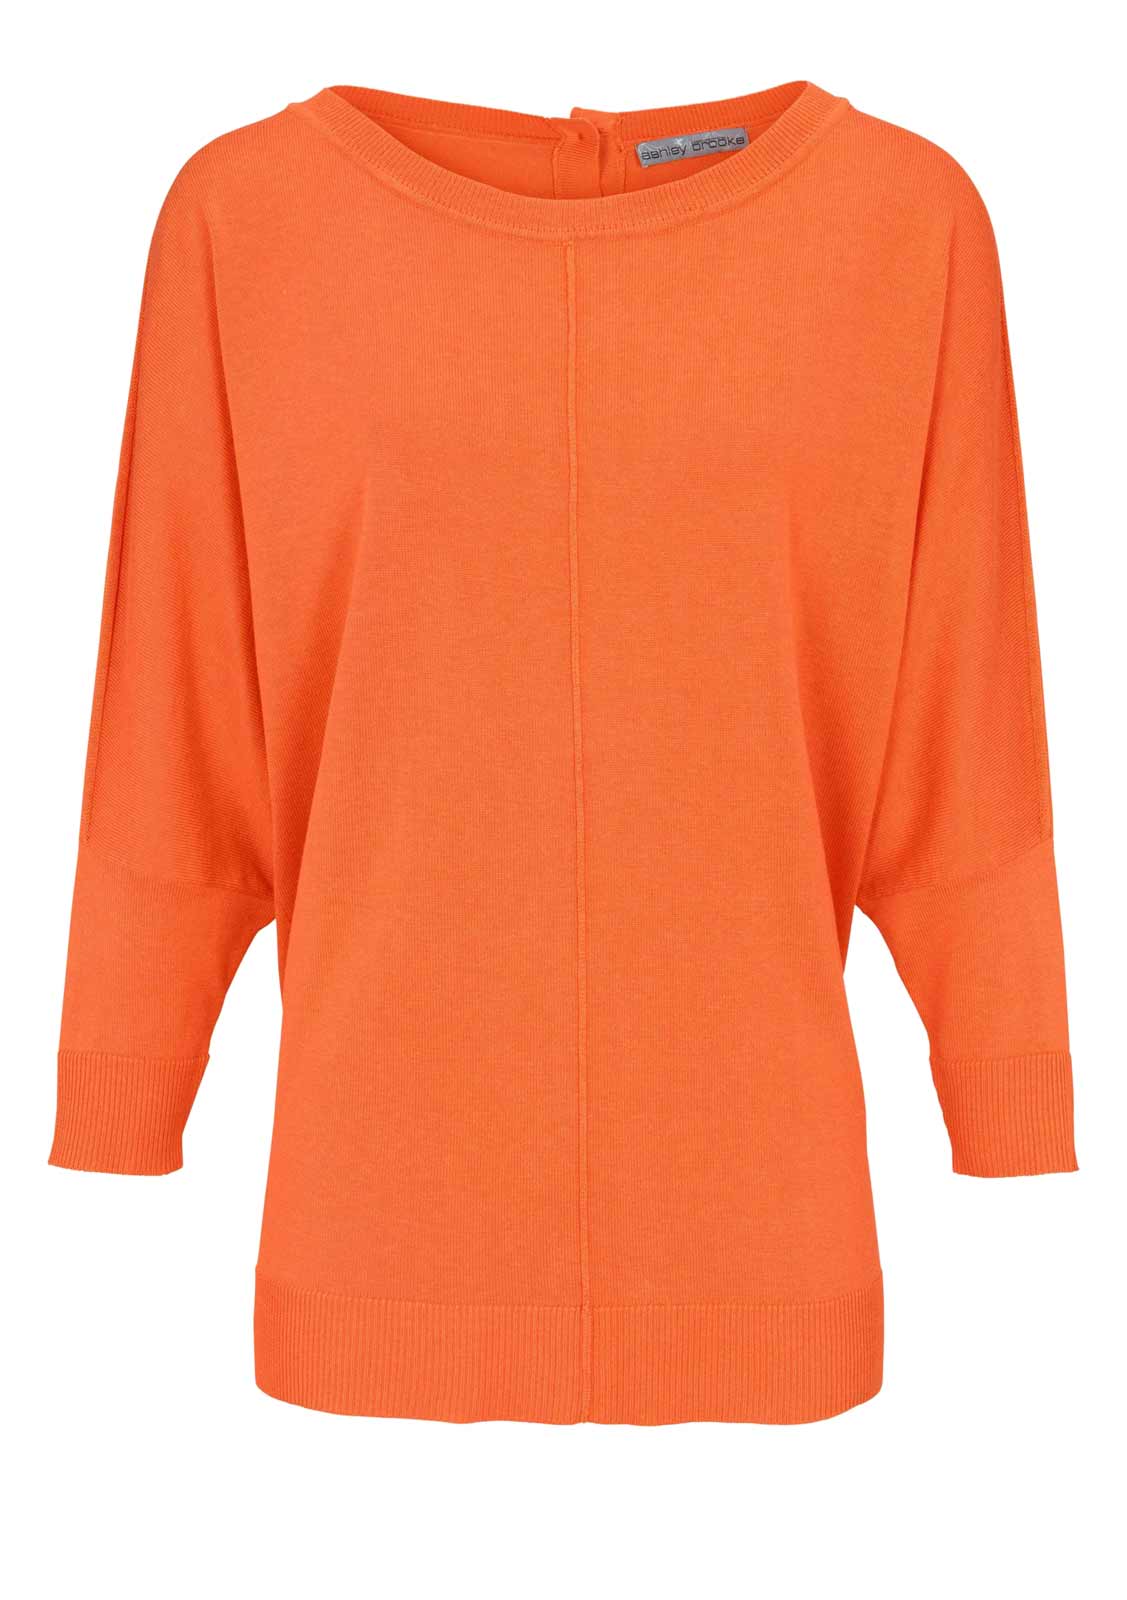 Ashley Brooke Damen Designer-Oversizedpullover, orange